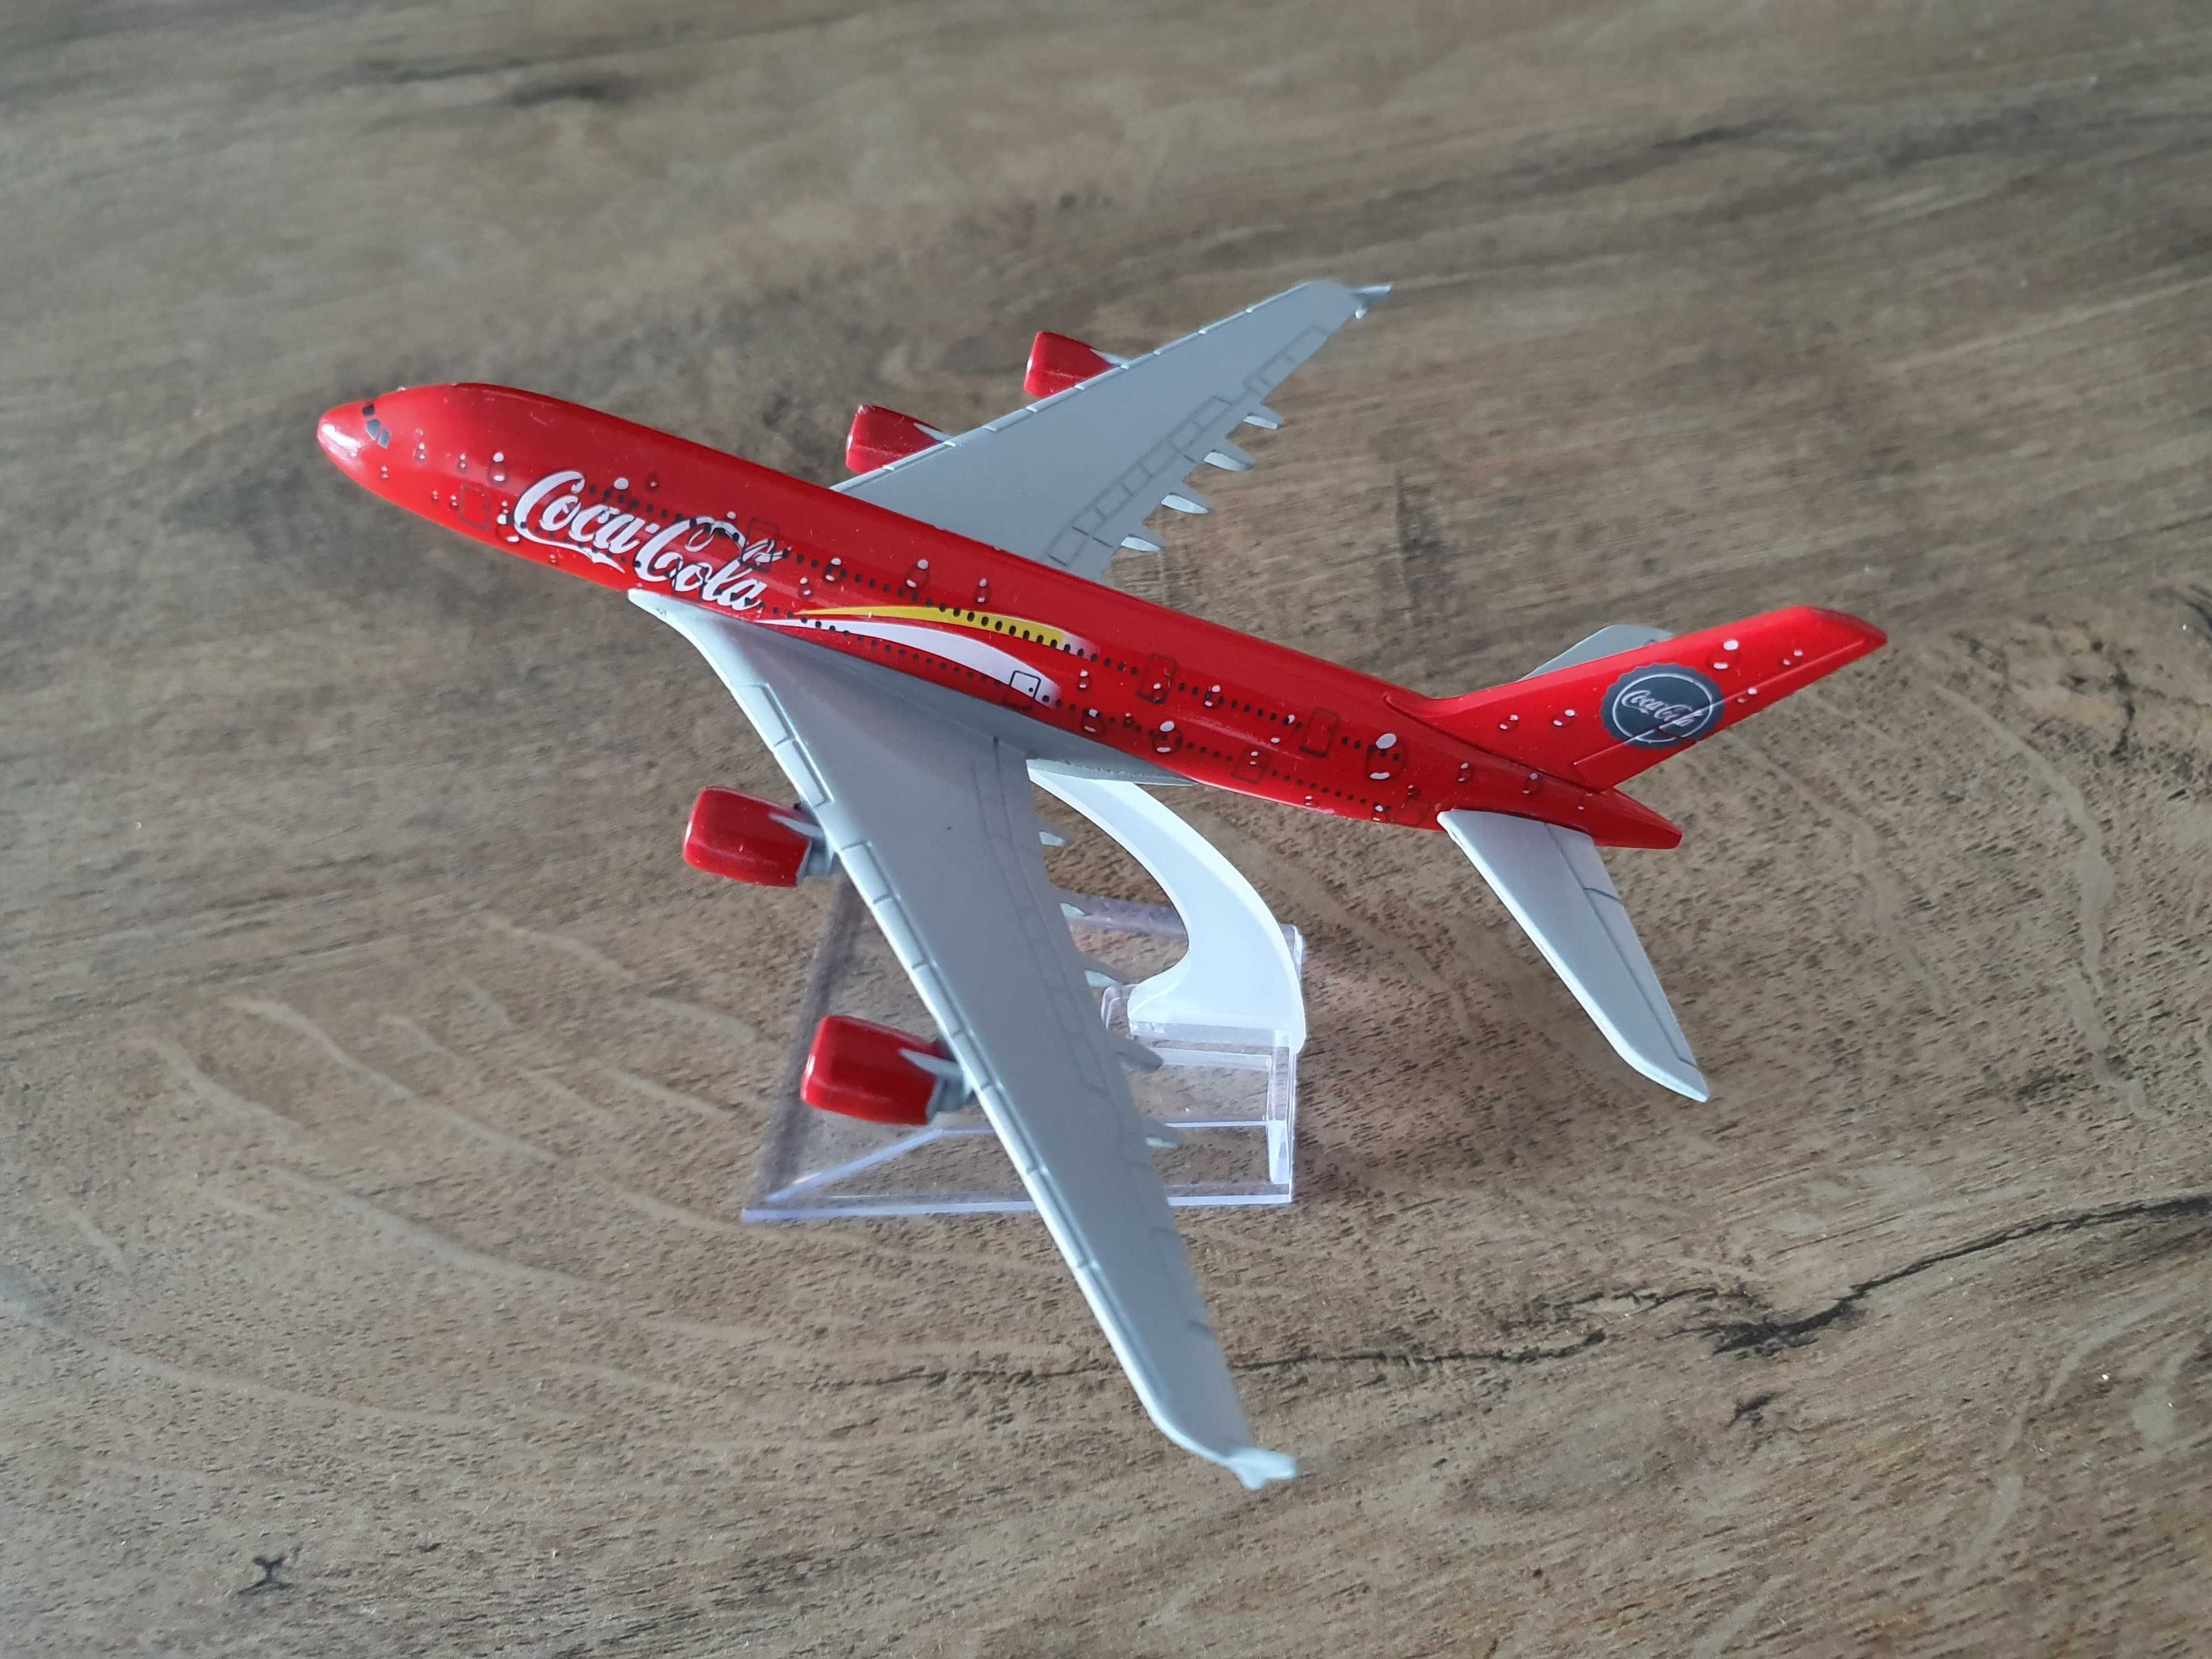 Macheta metalica de avion Coca Cola | Decoratie | Perfect pt cadou